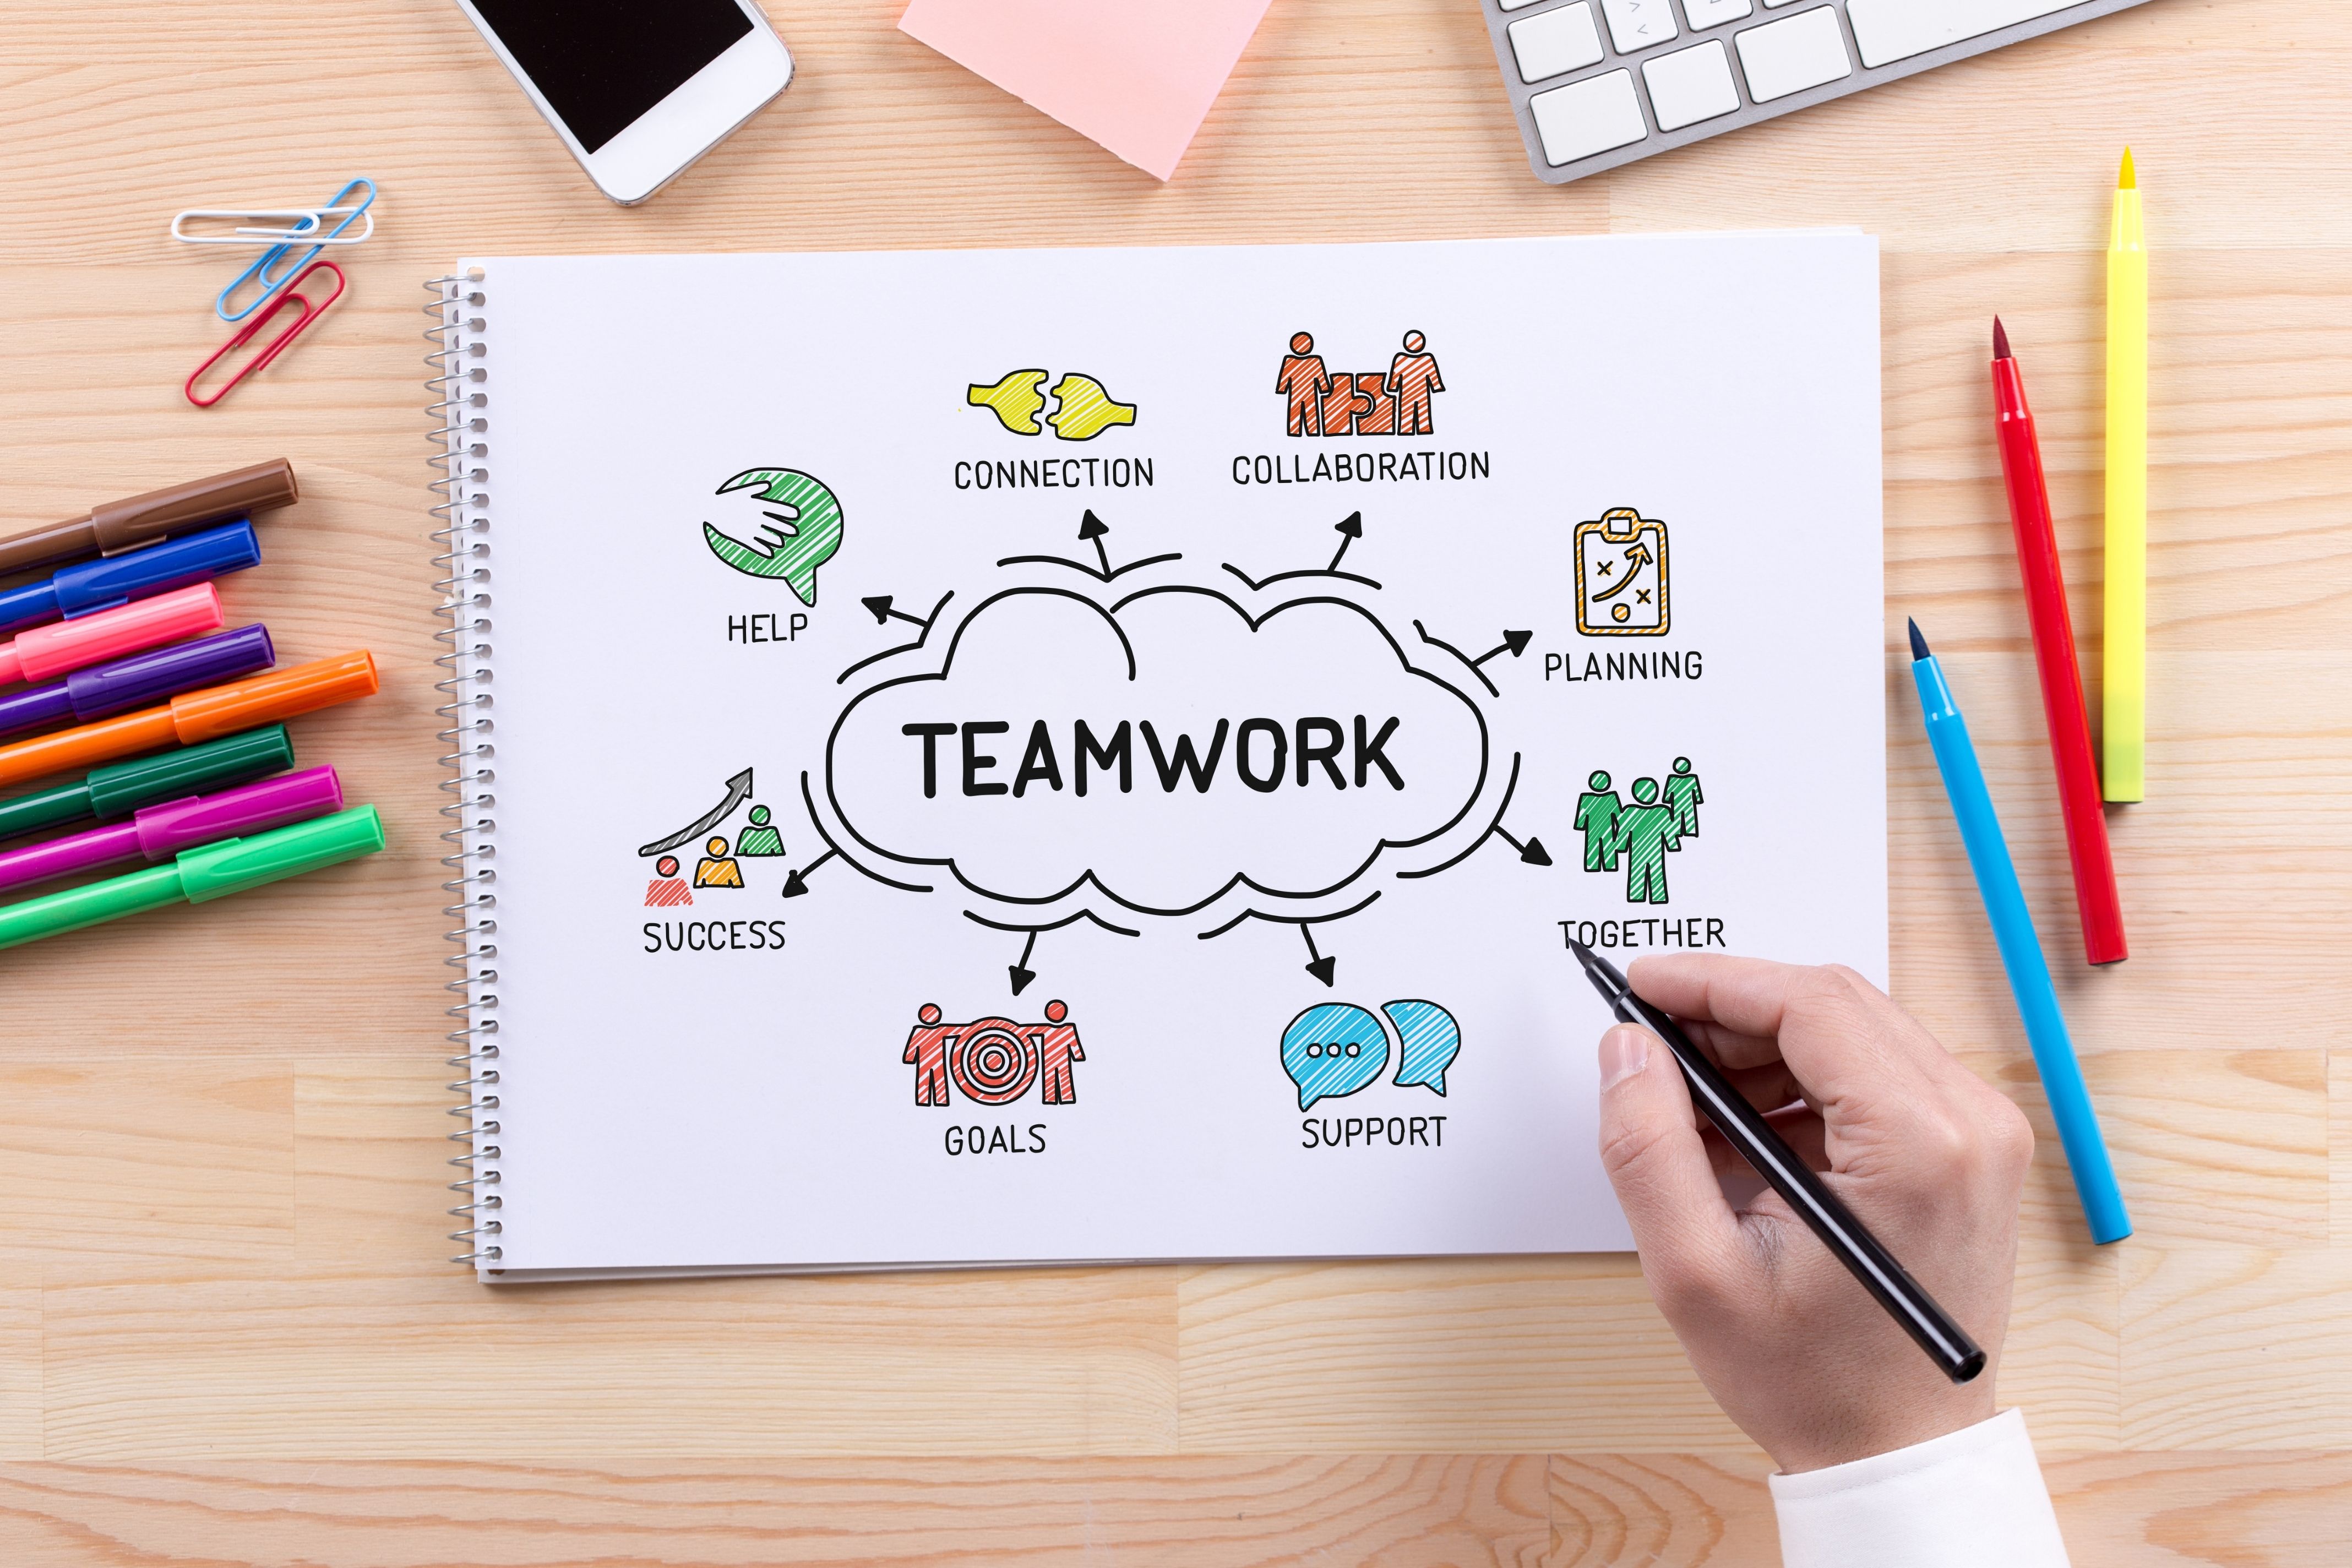 Teamwork collaboration, connection, success